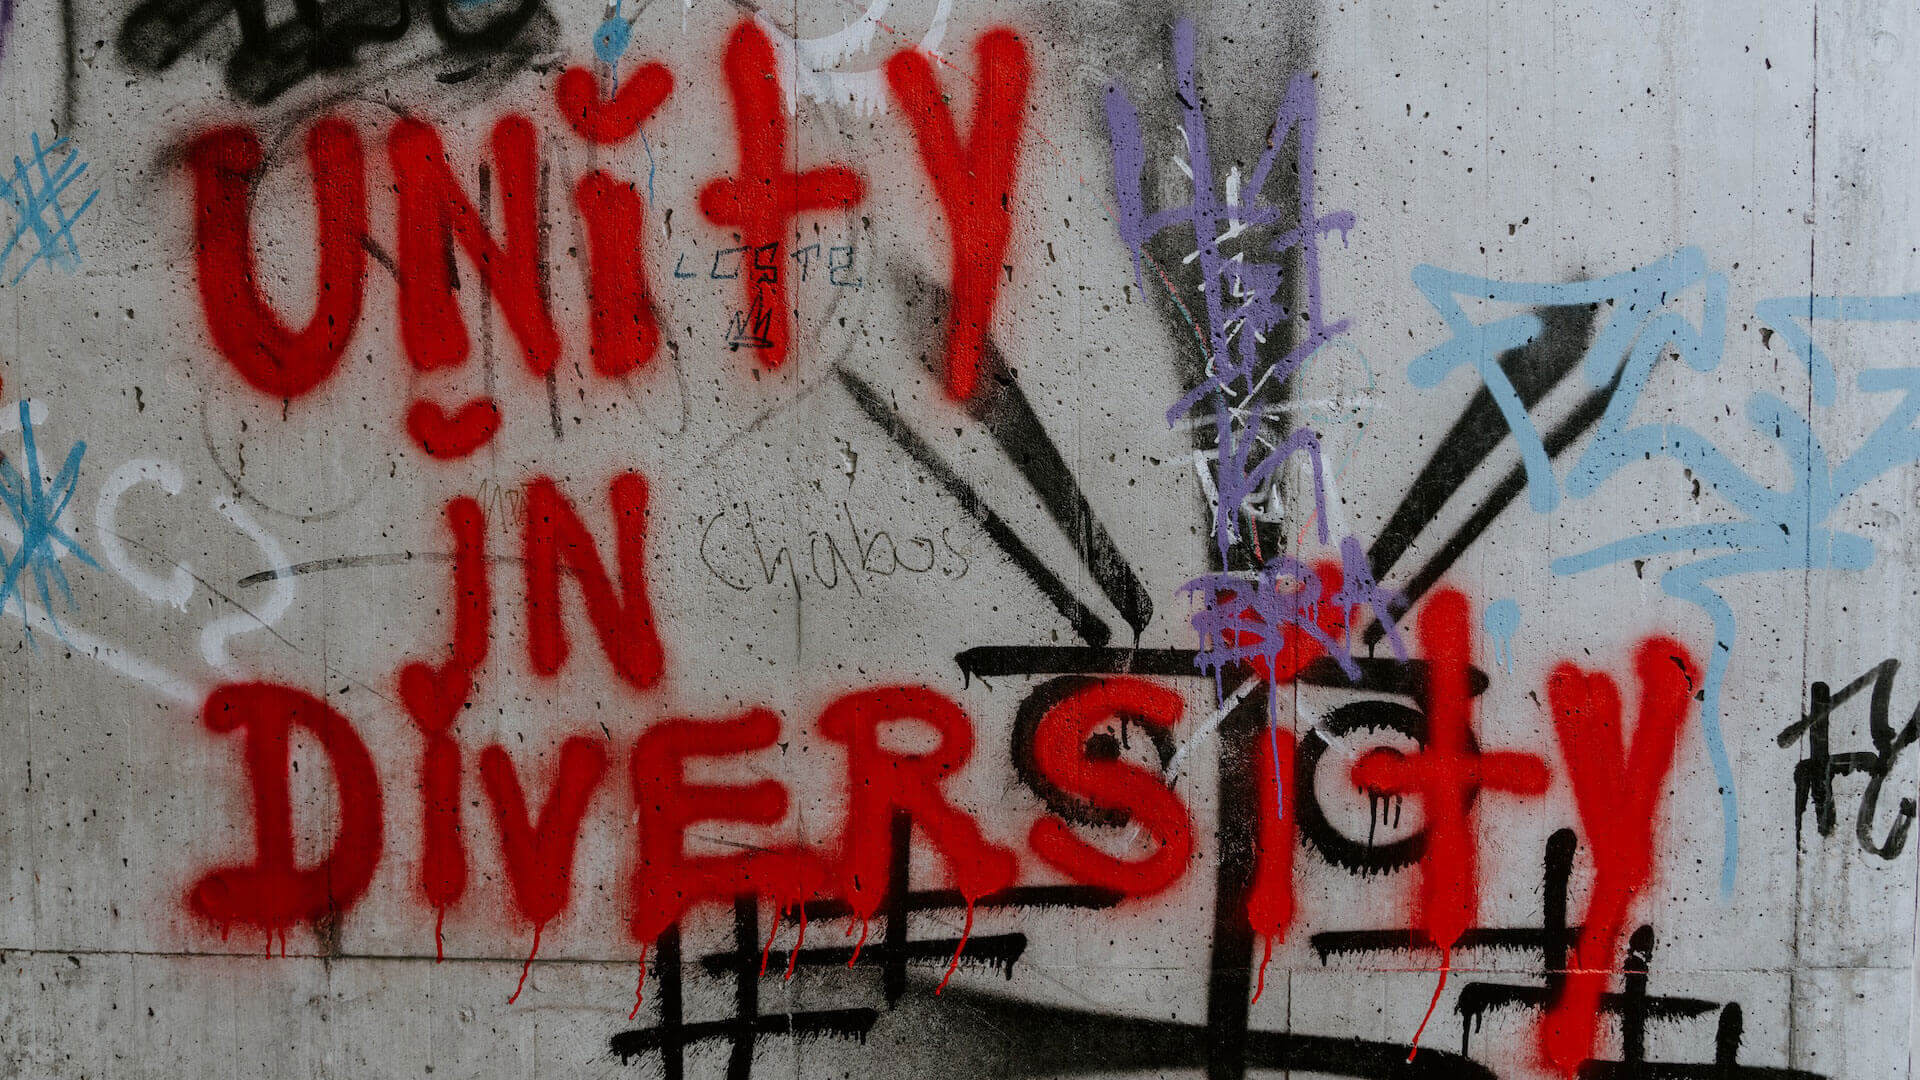 grafiti com as palavras Unity in diversity